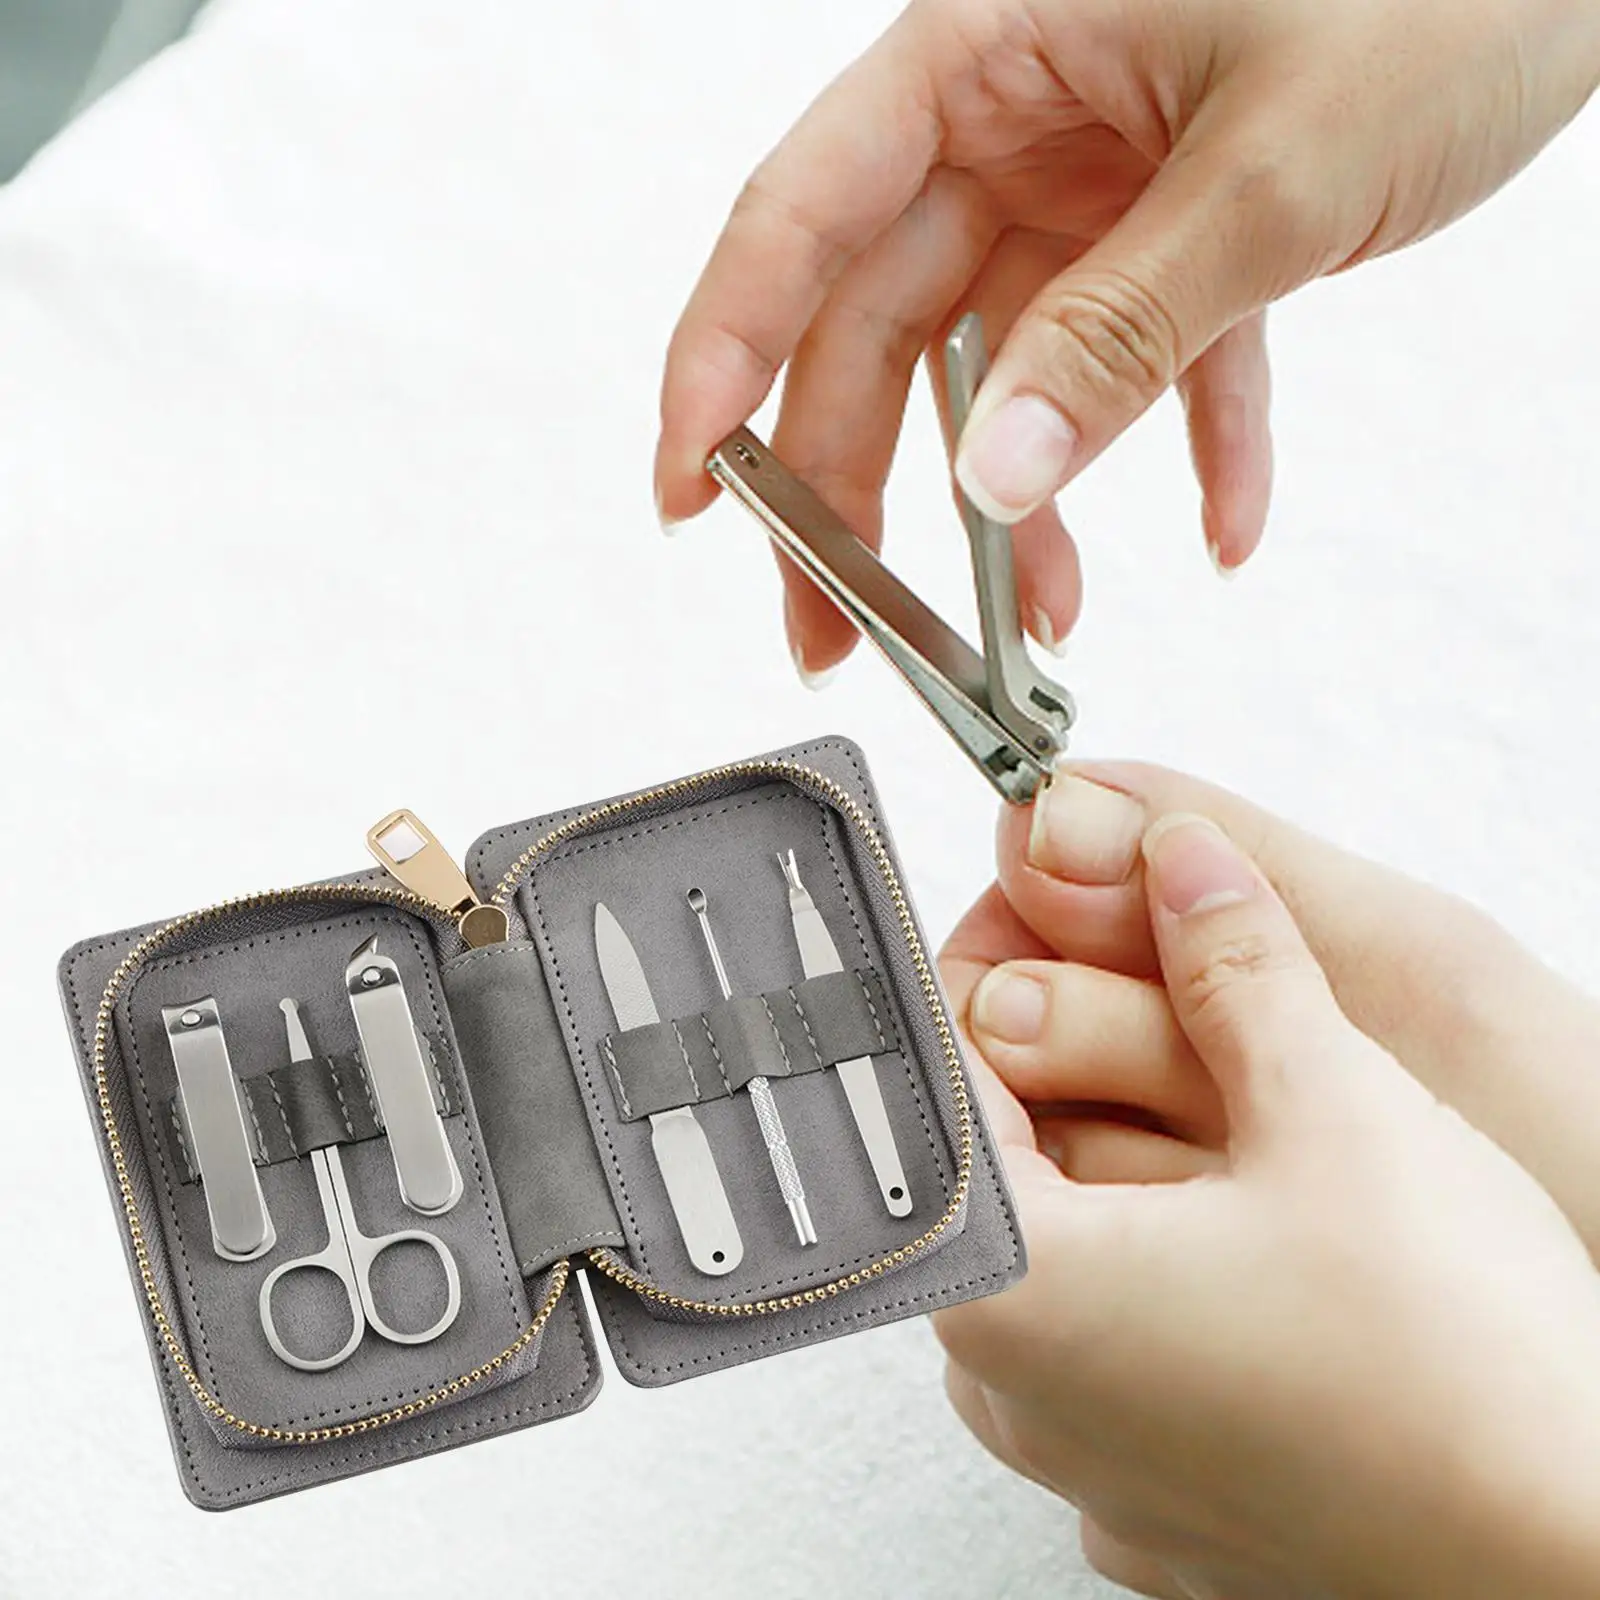 6Pcs Portable Manicure Kit Gift Fingernails Toenails Nail Care Tools Grooming Kit Nail Clippers Pedicure Kit for Travel Home